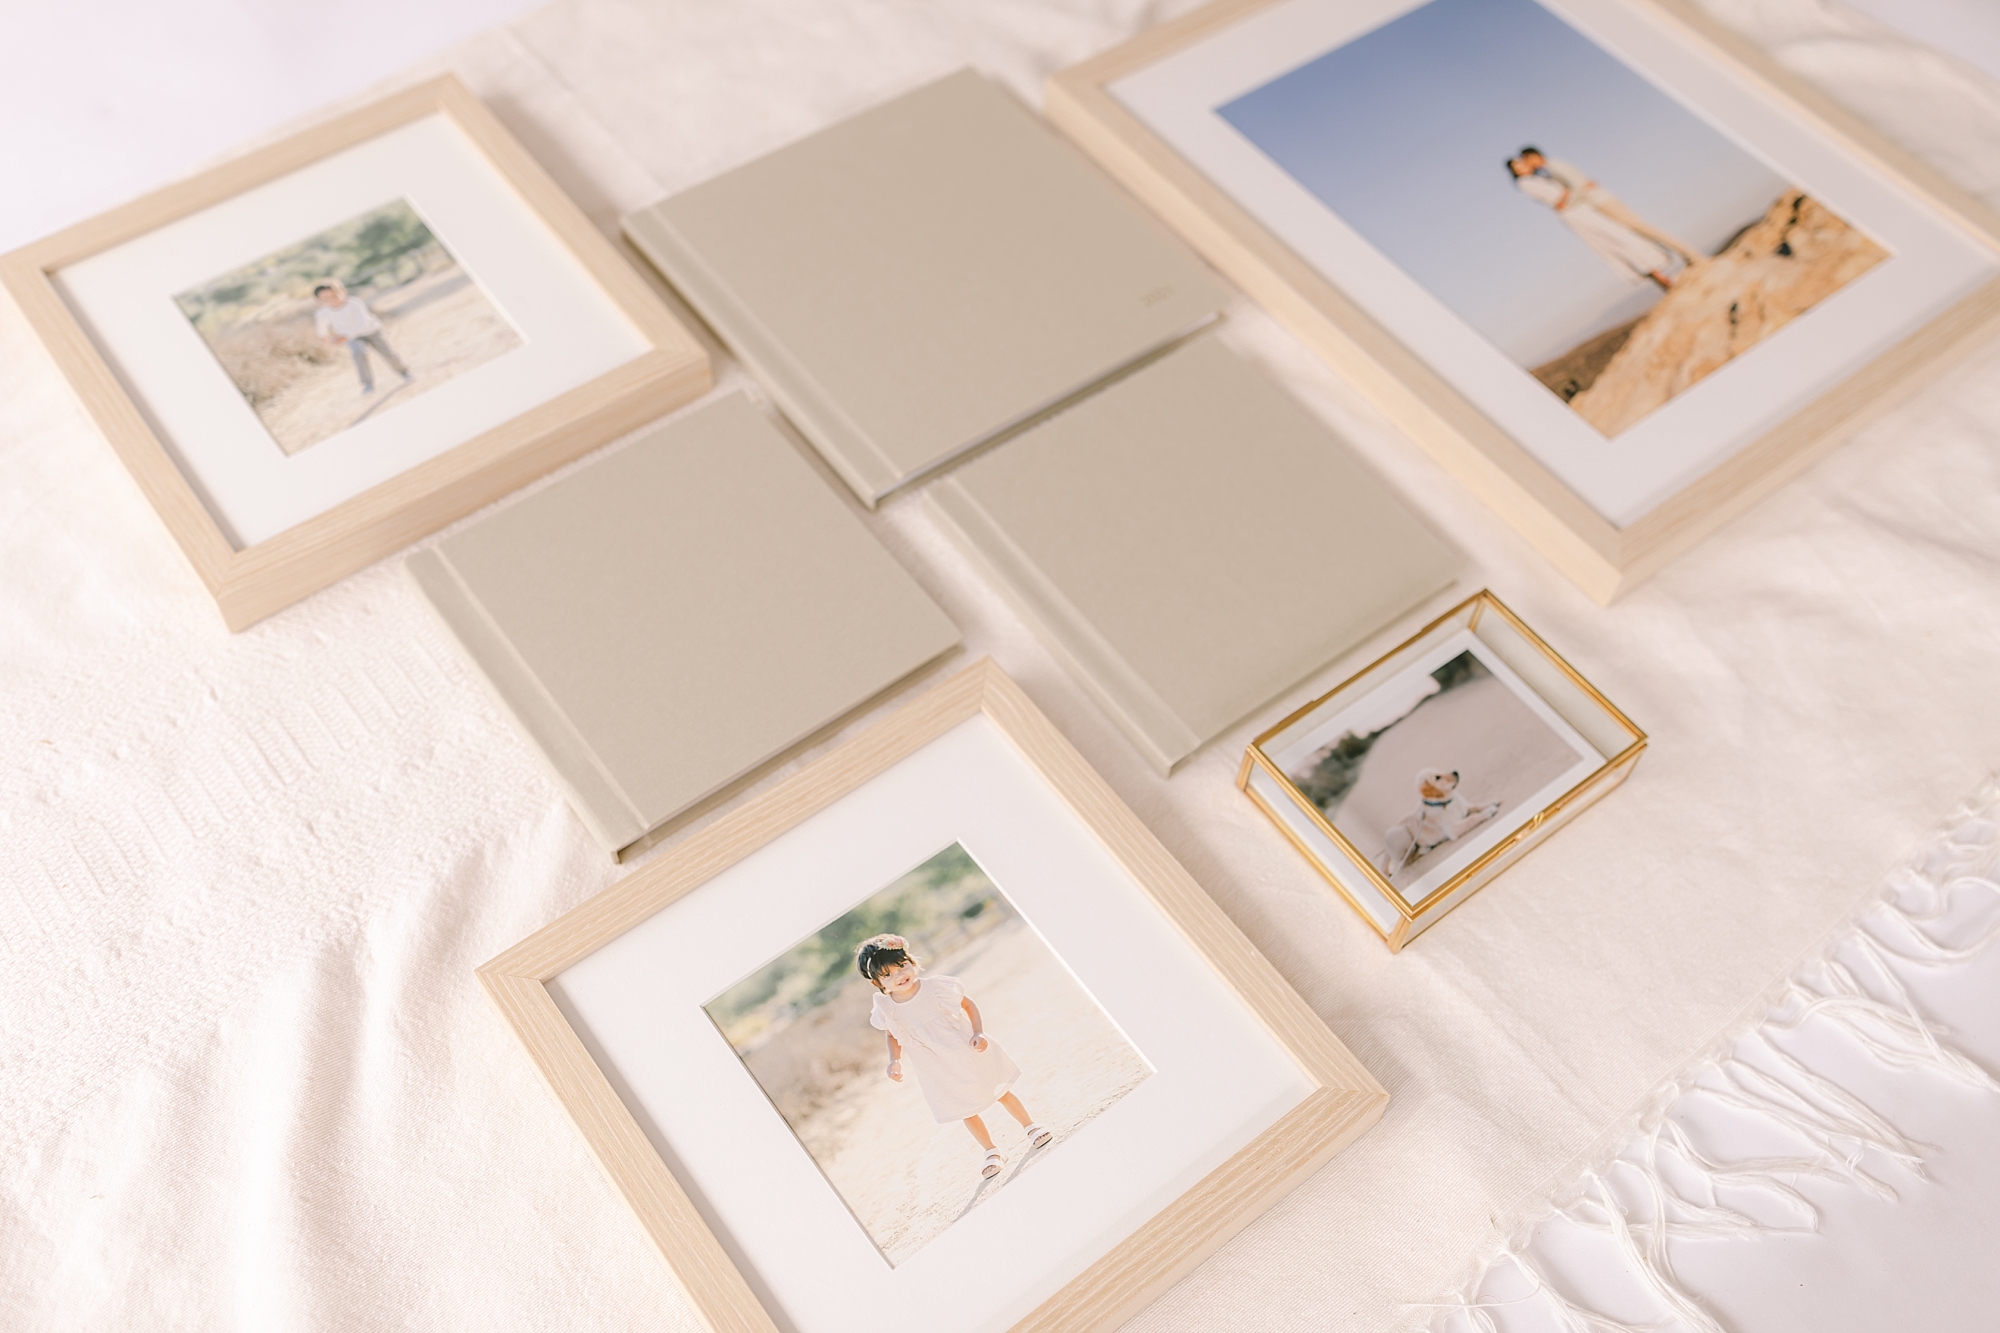 fine art frames for family photos